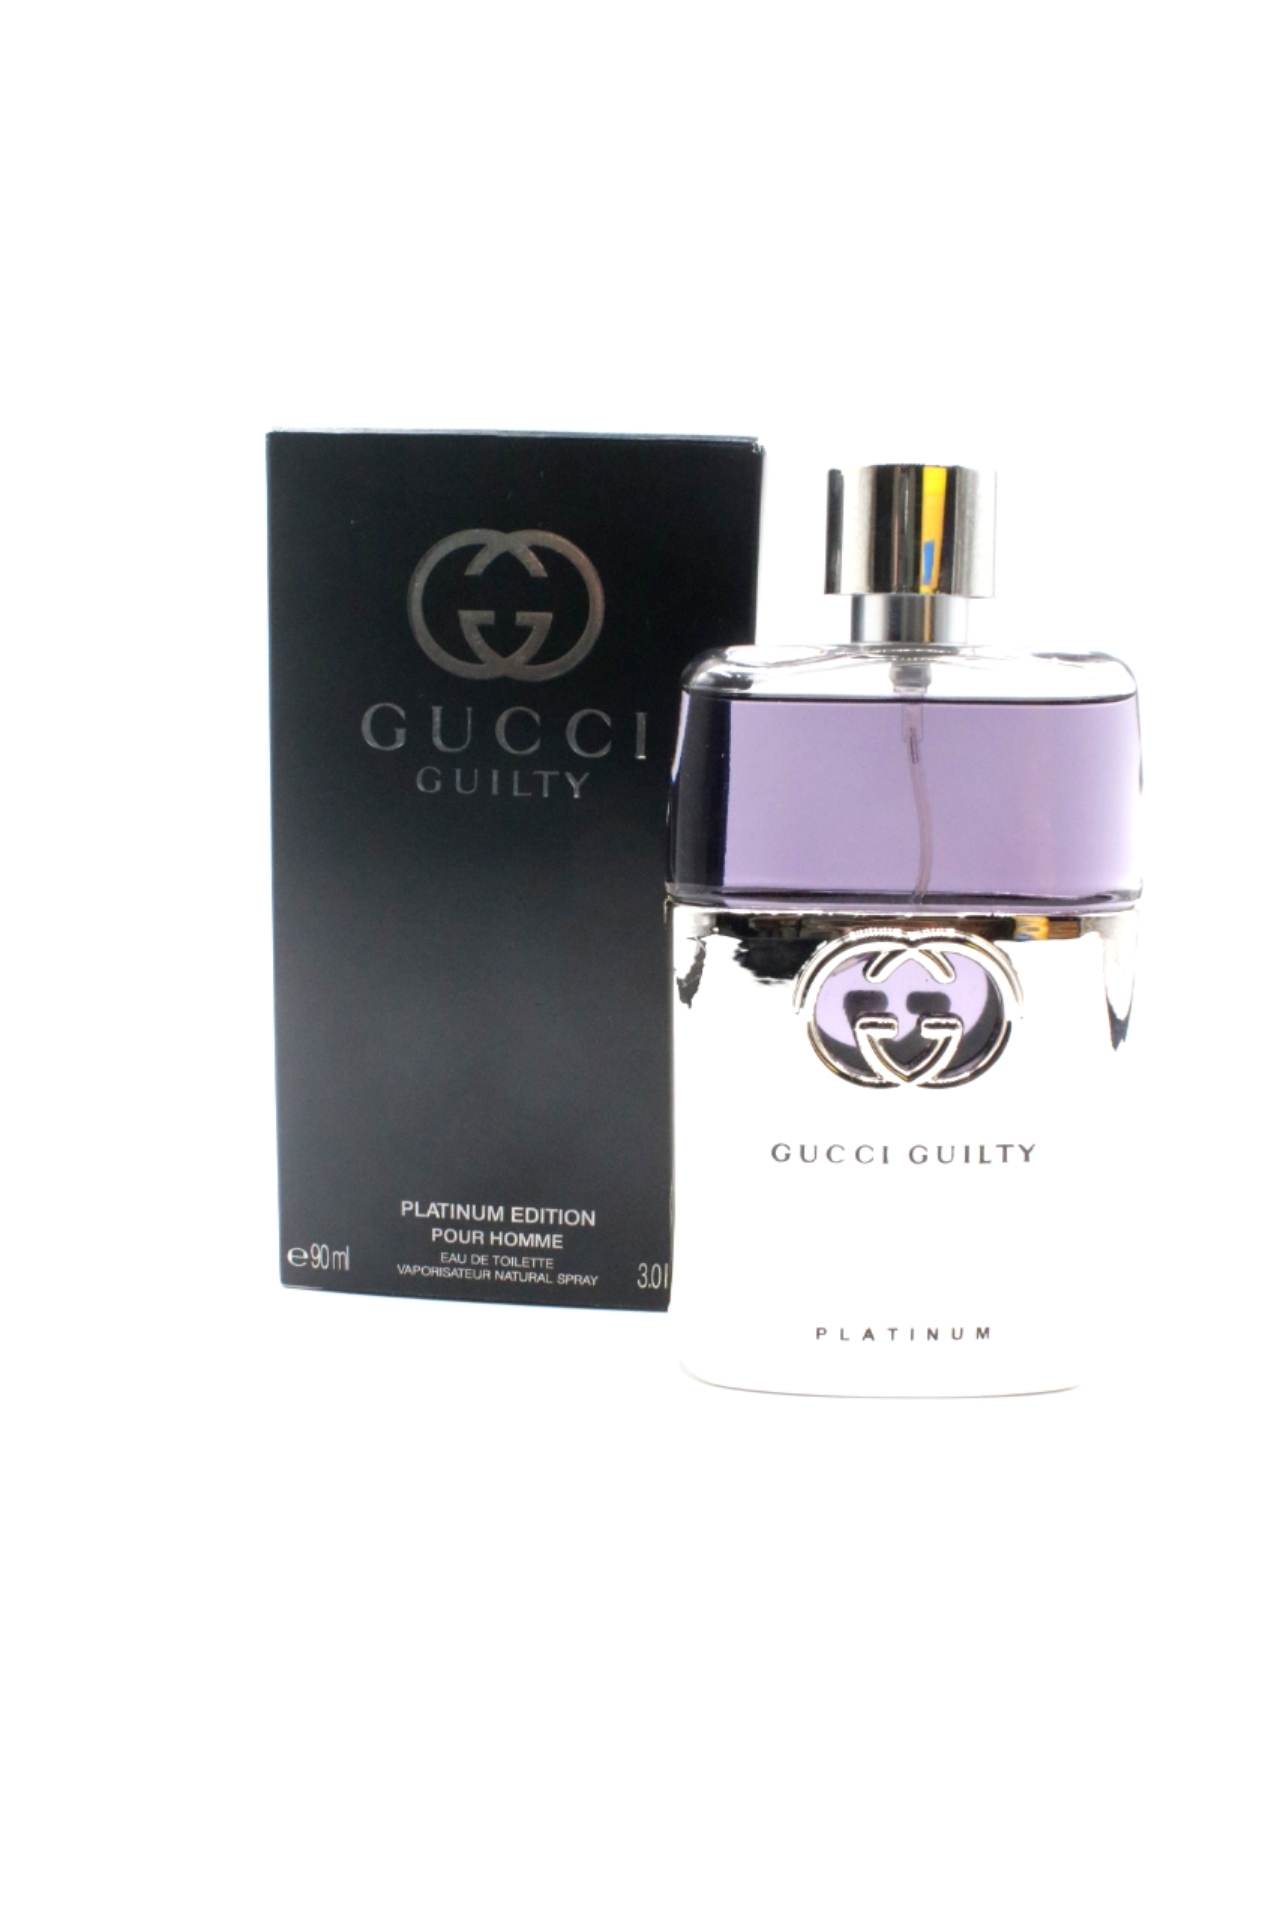 GUCCI Guilty 90 ml Perfume